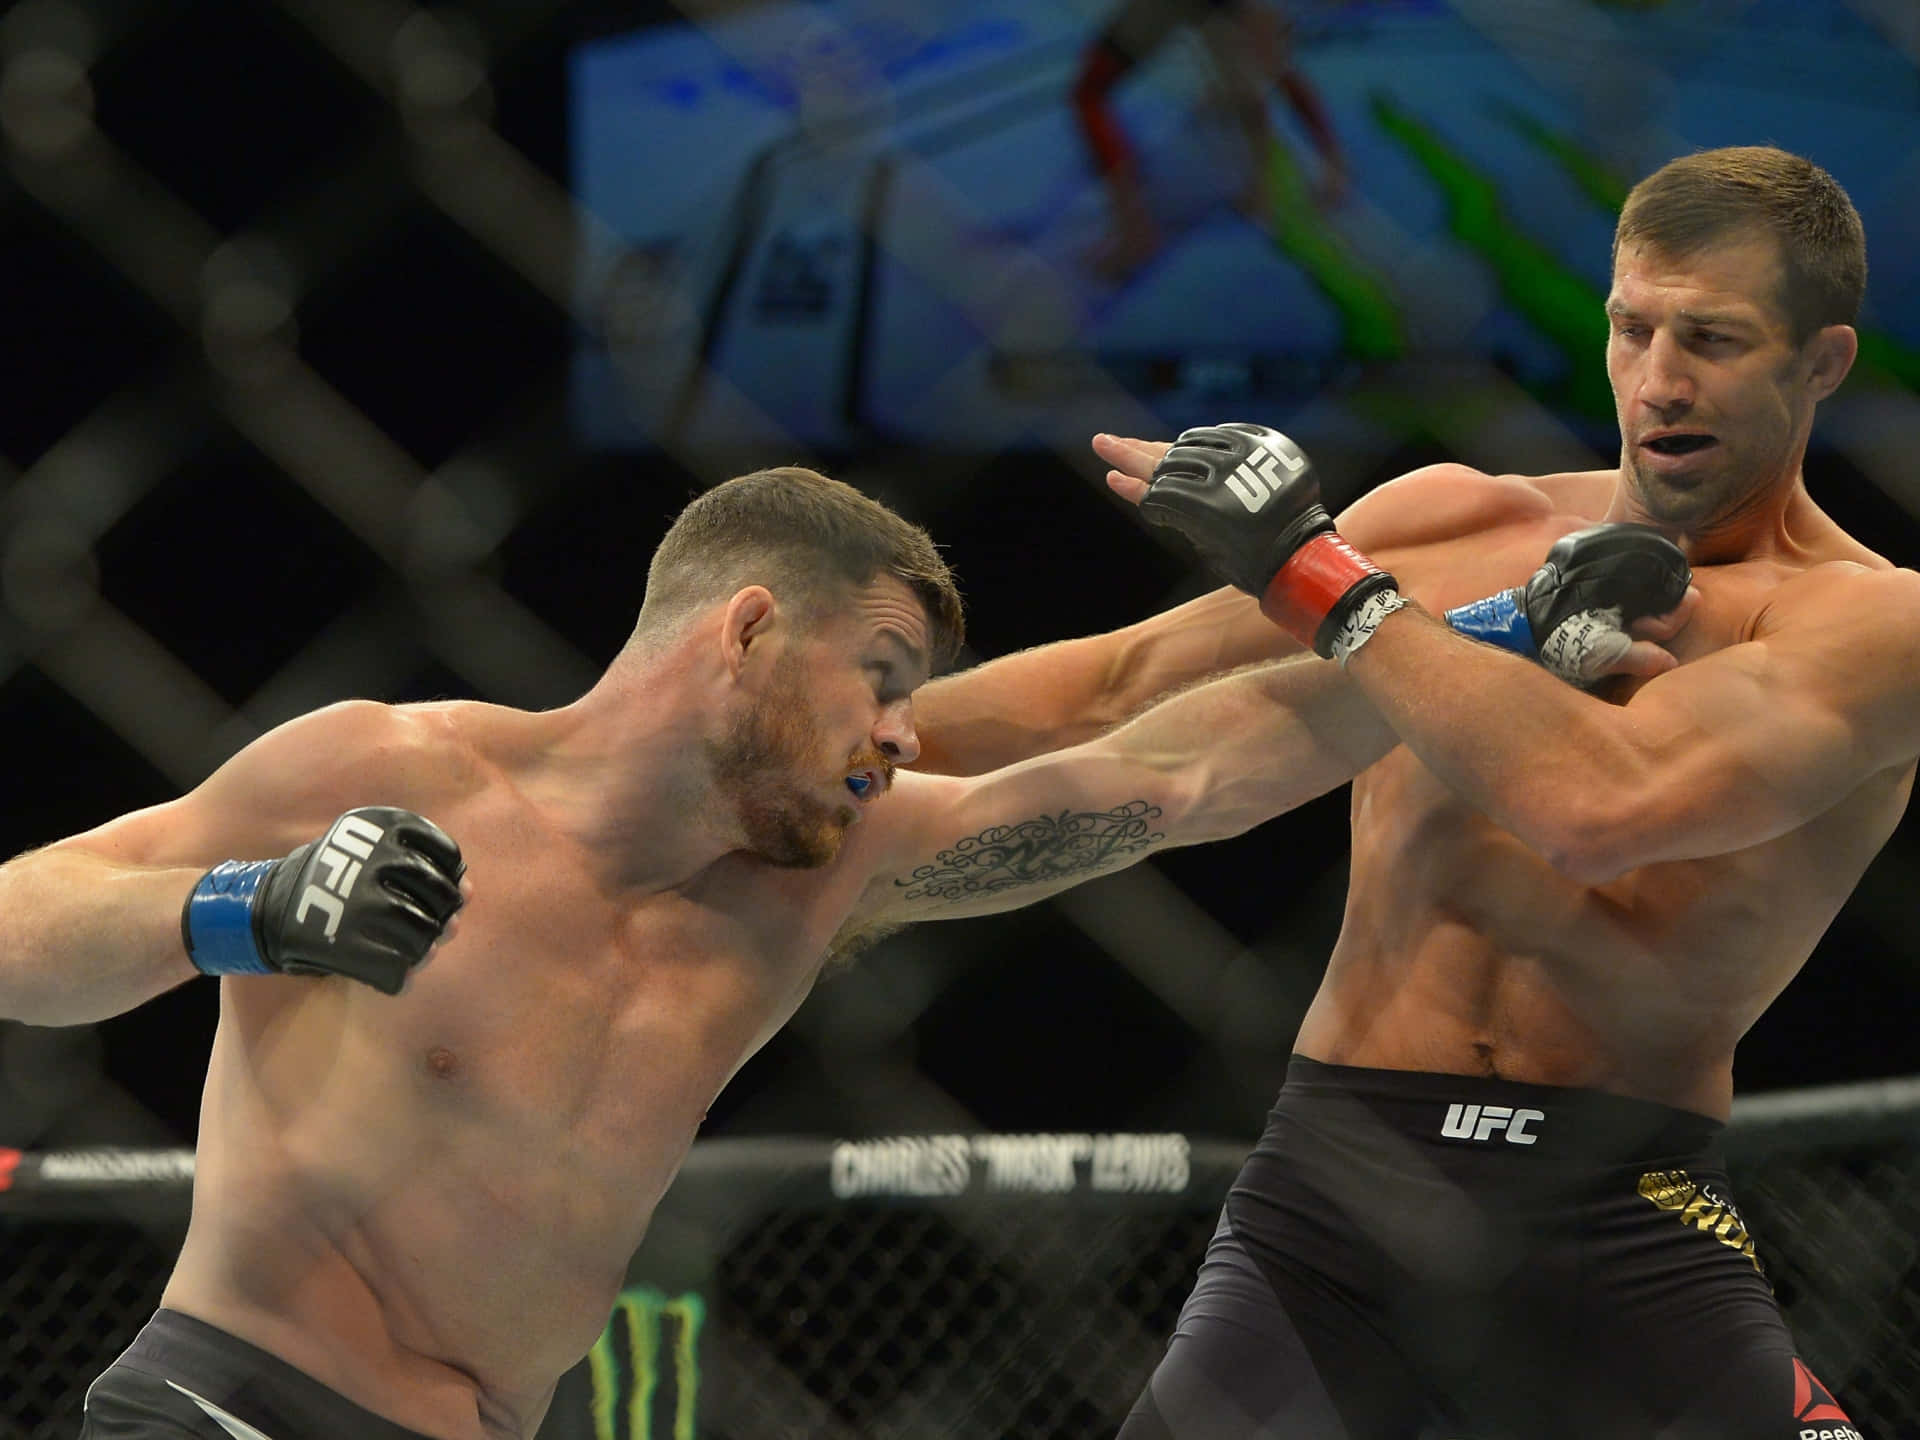 English UFC Fighter Michael Bisping Strikes Luke Rockhold 2016 Photograph Wallpaper